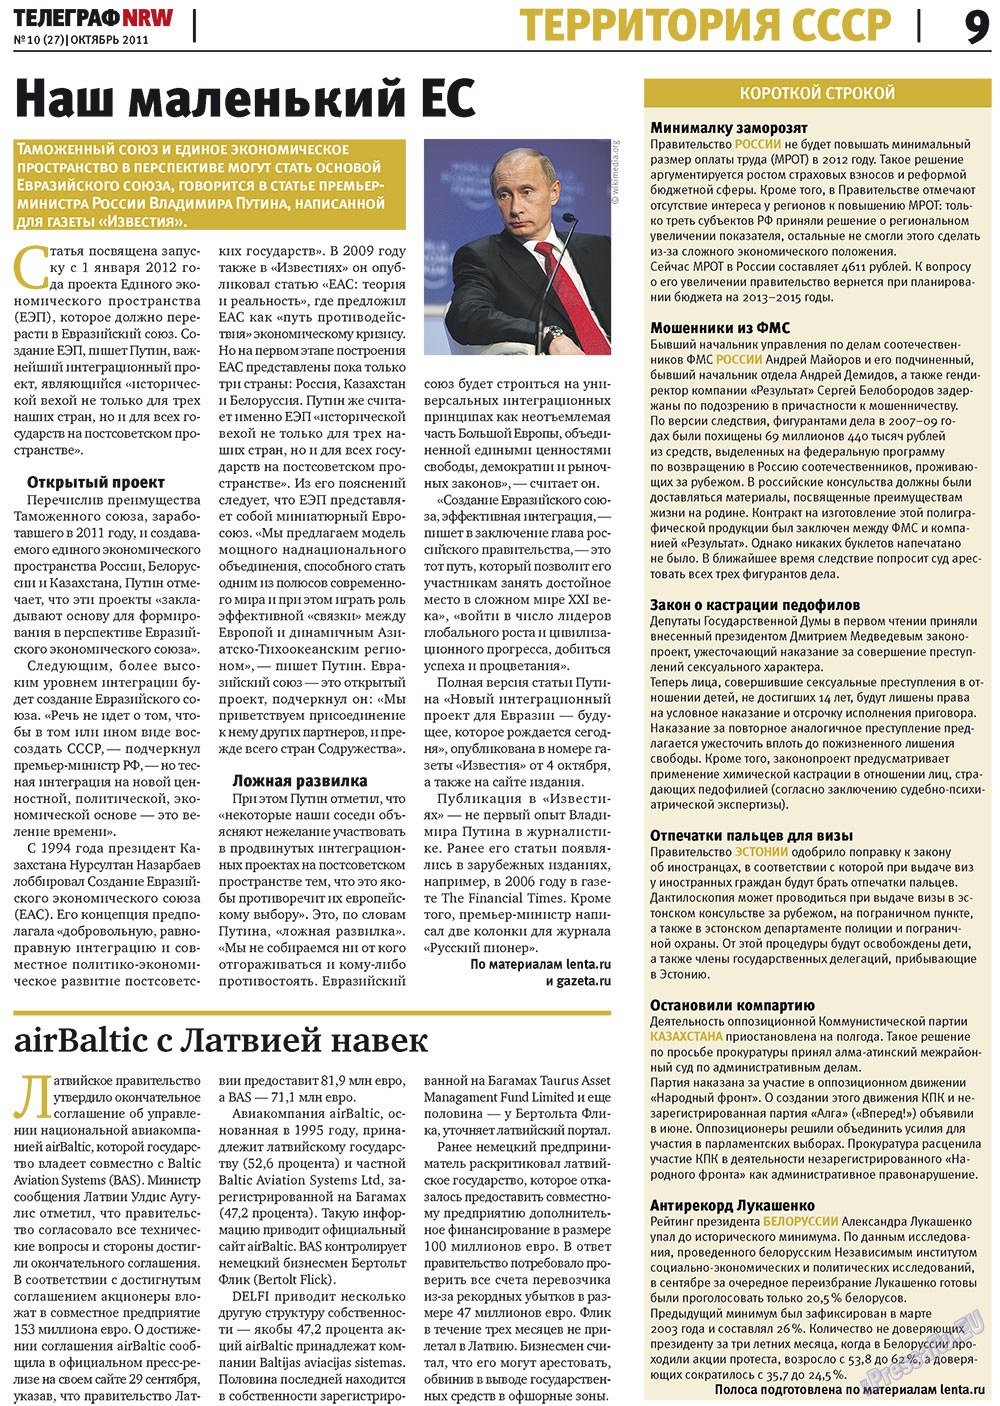 Телеграф NRW, газета. 2011 №10 стр.9